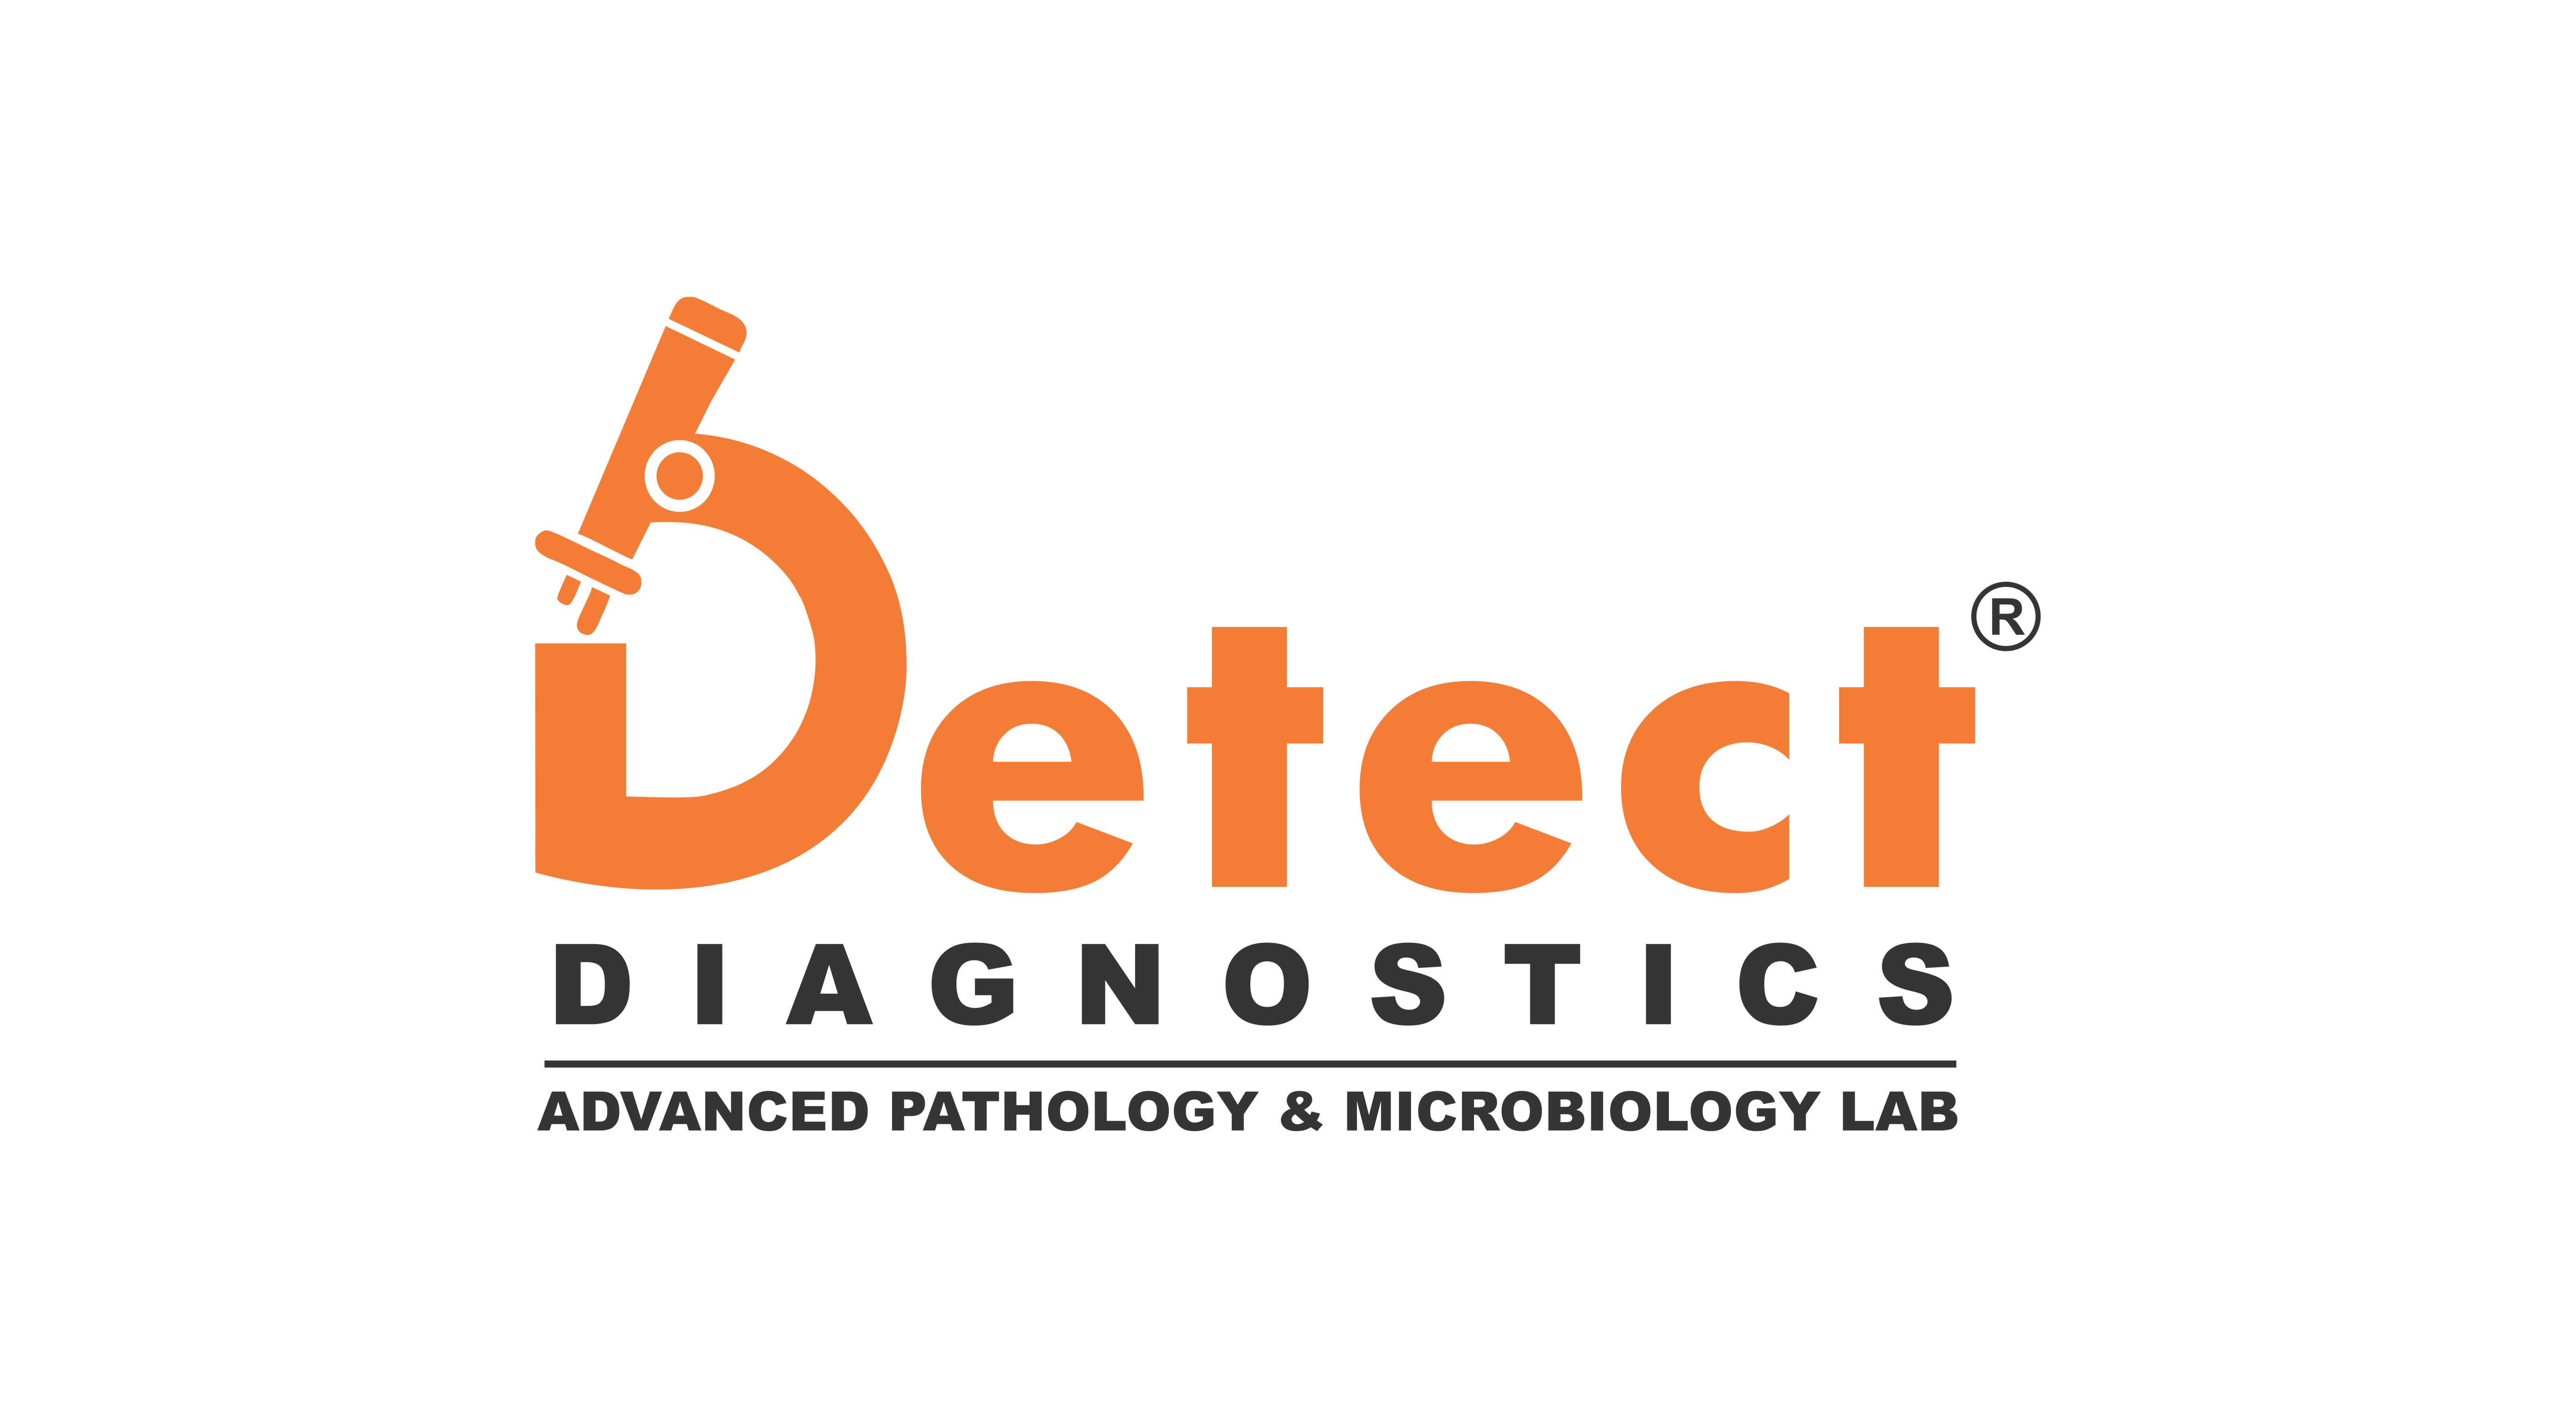 Detect Logo